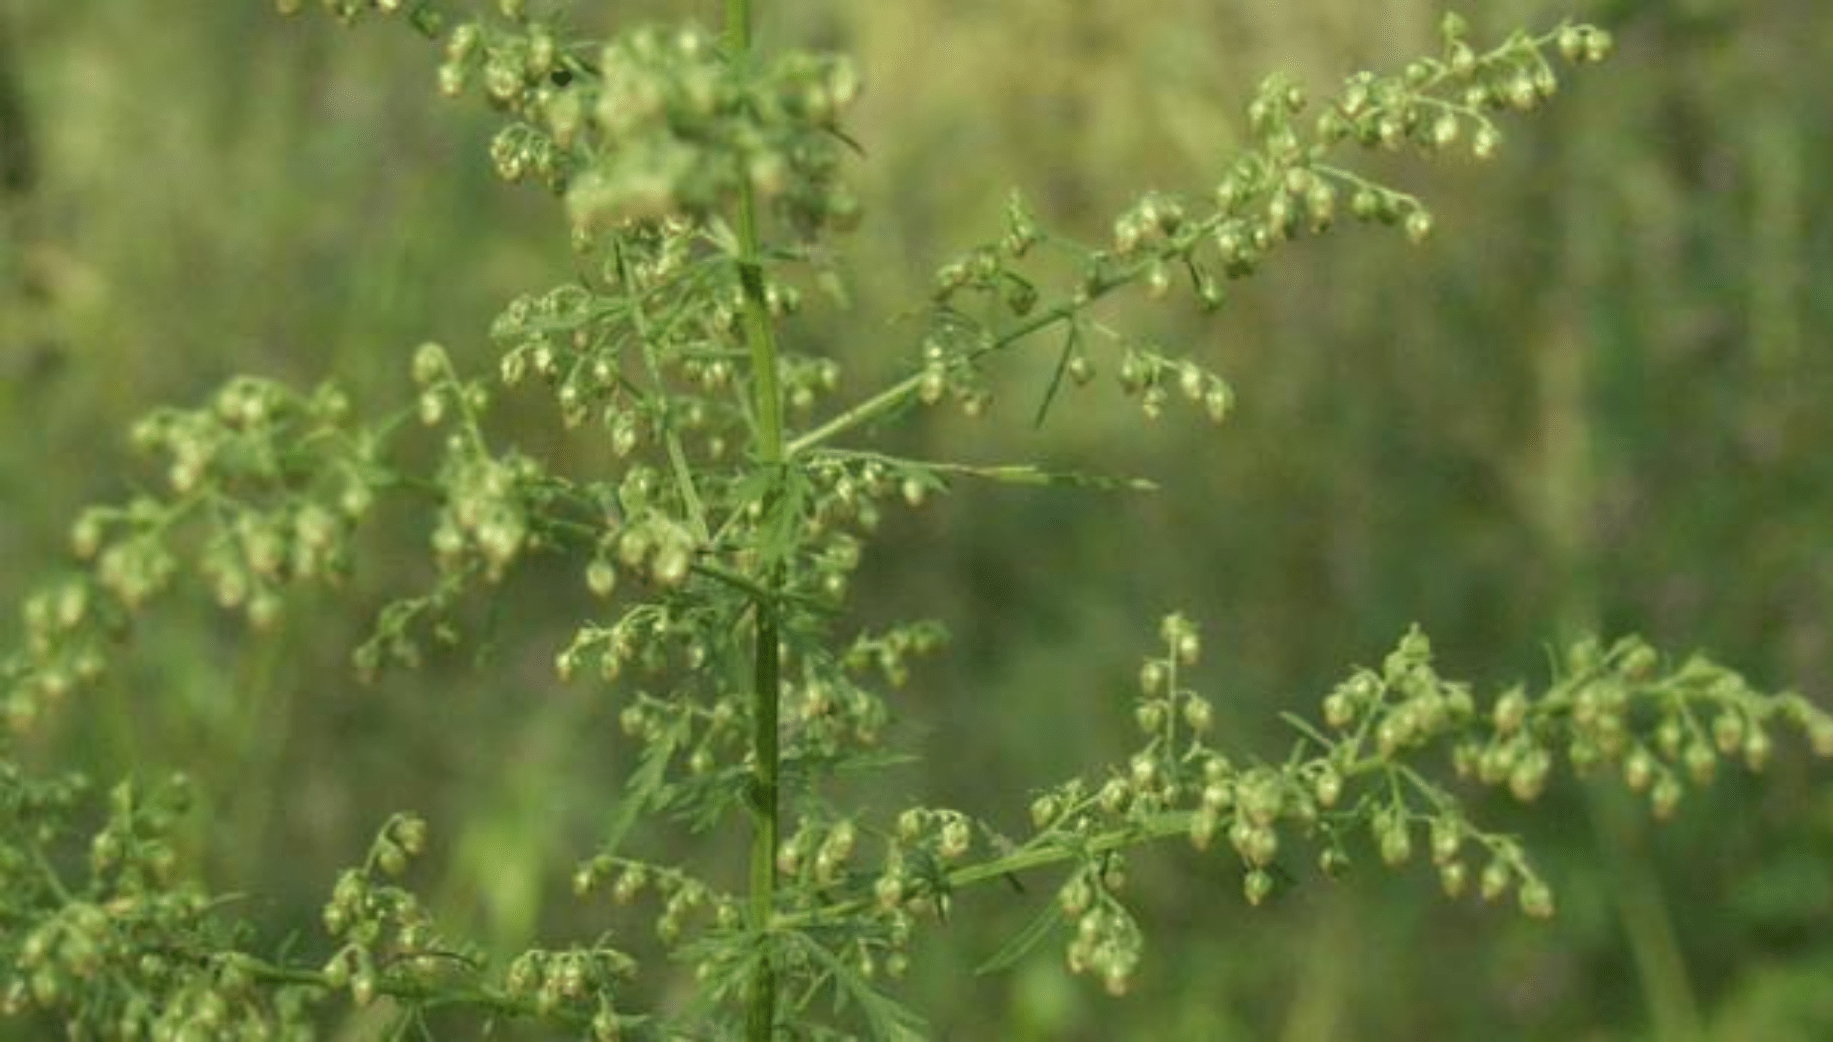 Artemisia Annua plant found in Meghalaya